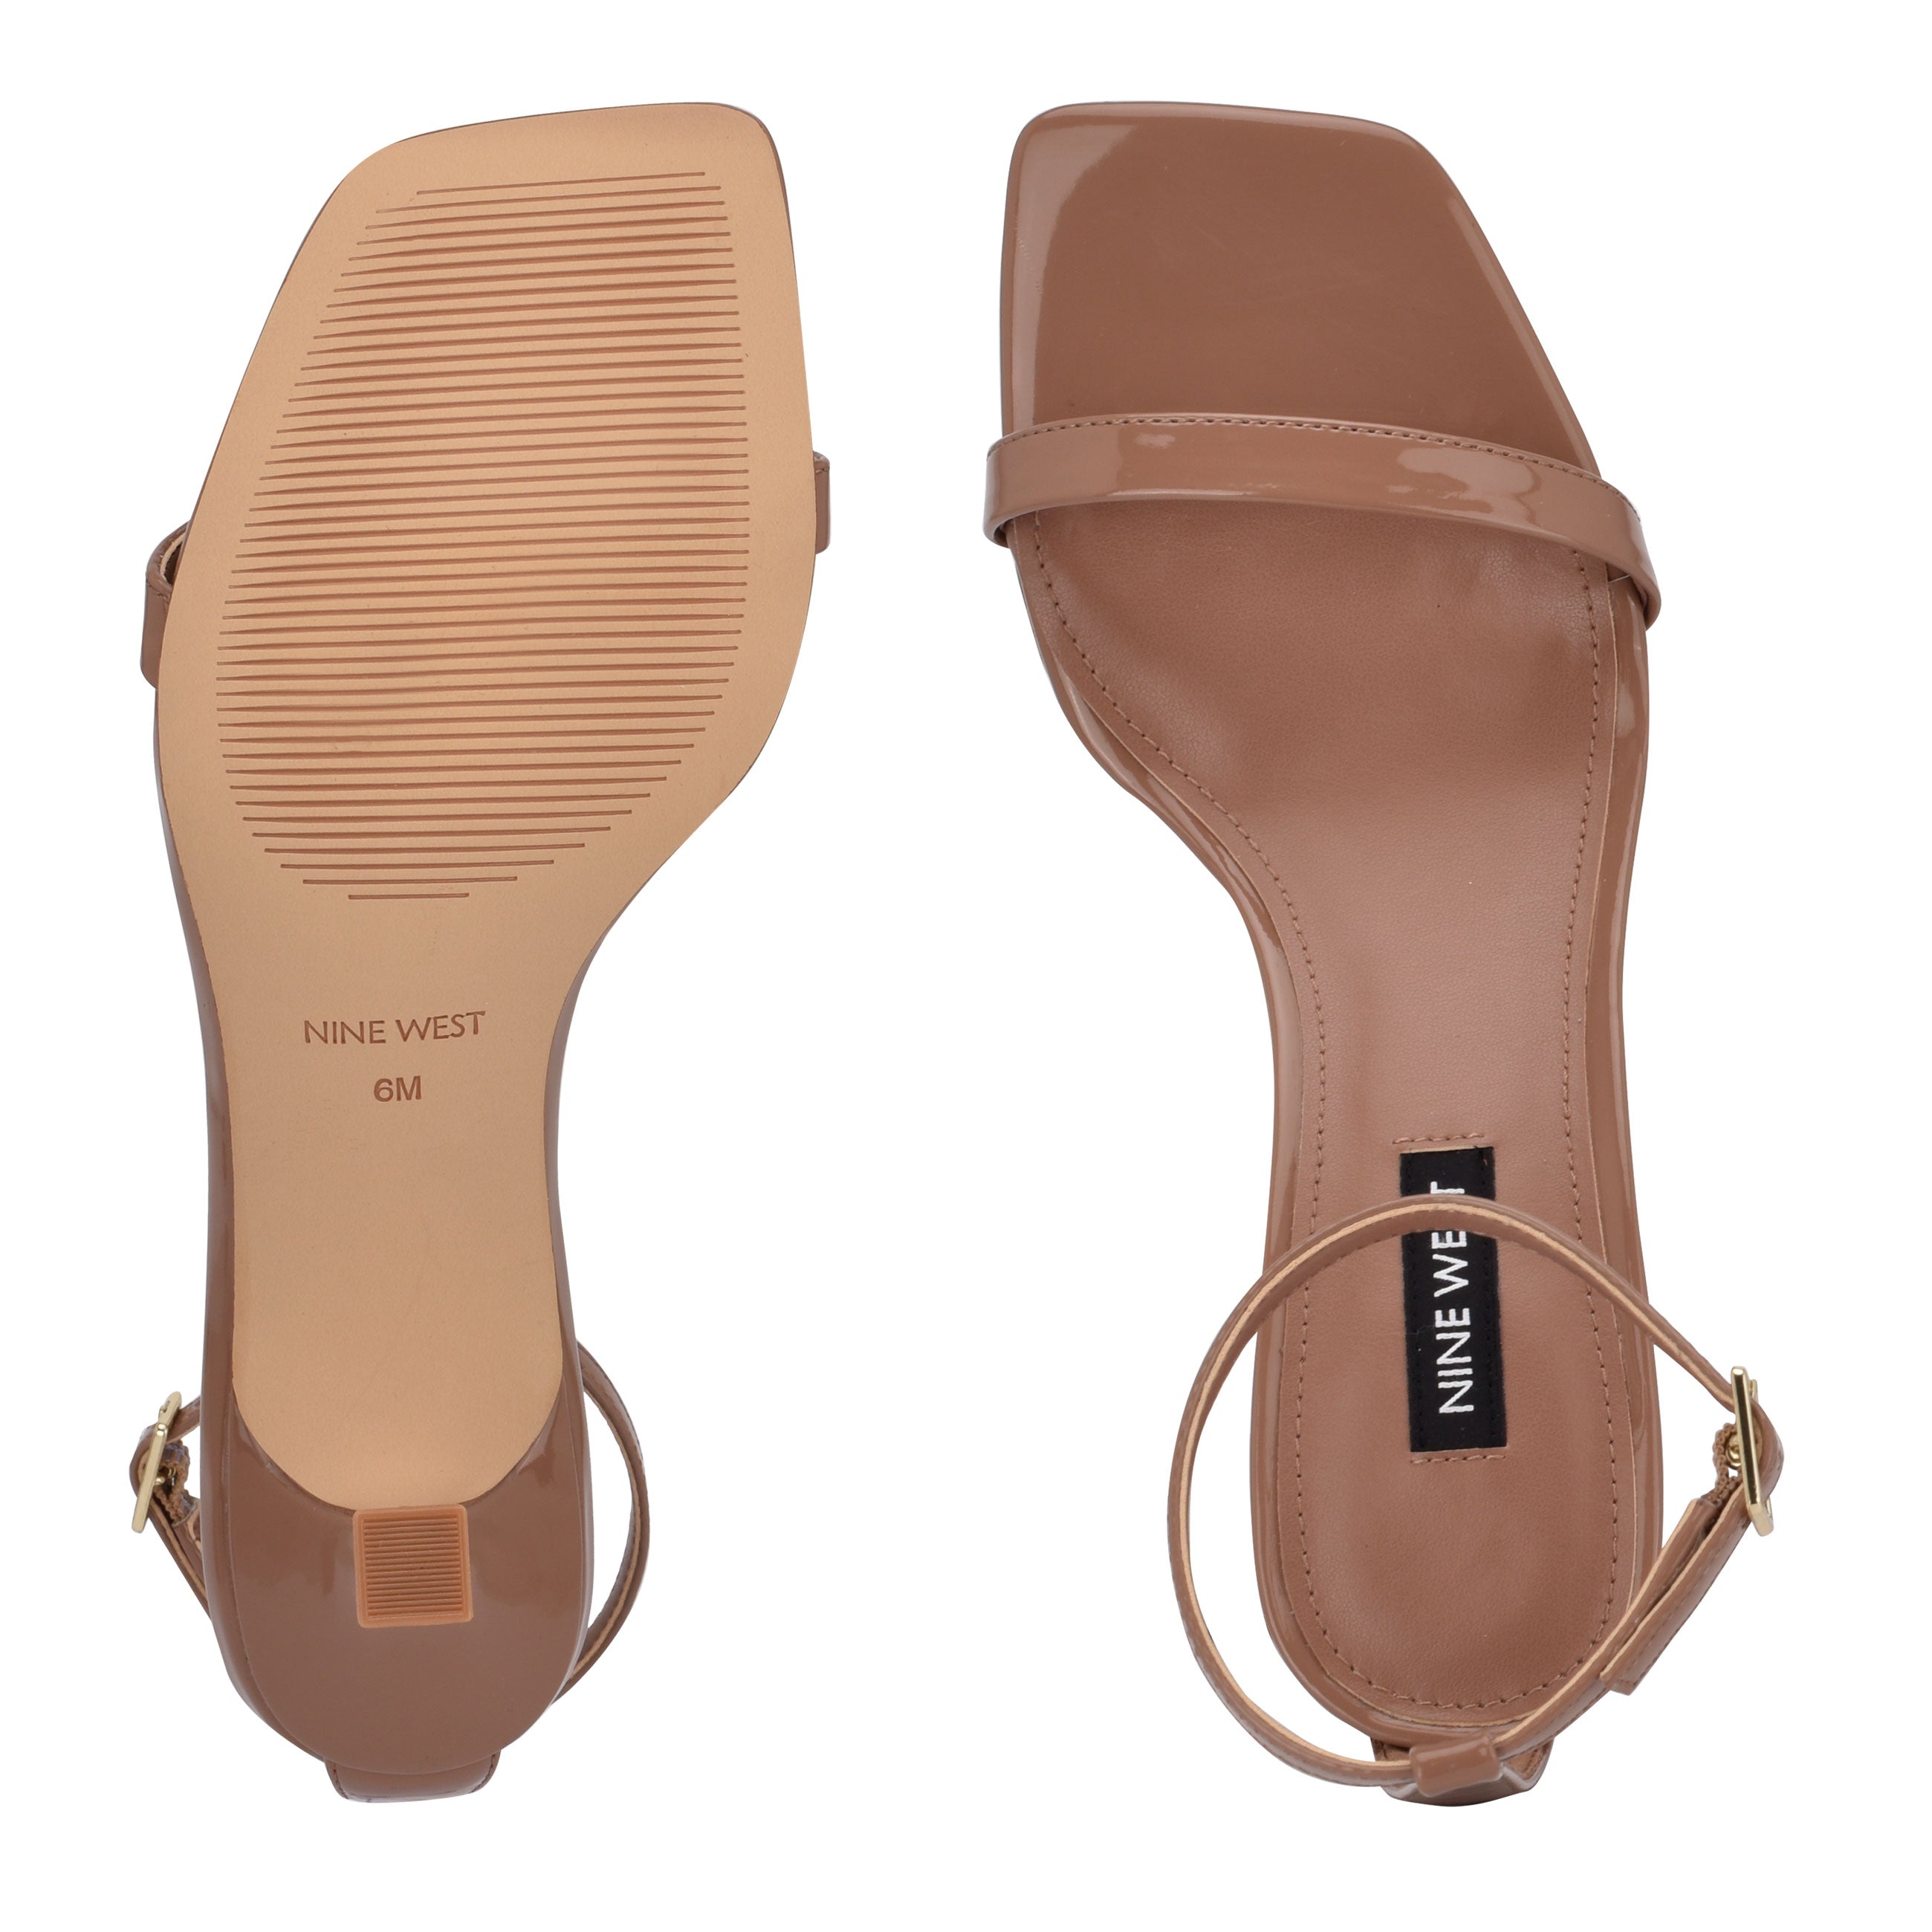 Nine West Women's GOOU3 Heeled Sandal, Clay Patent